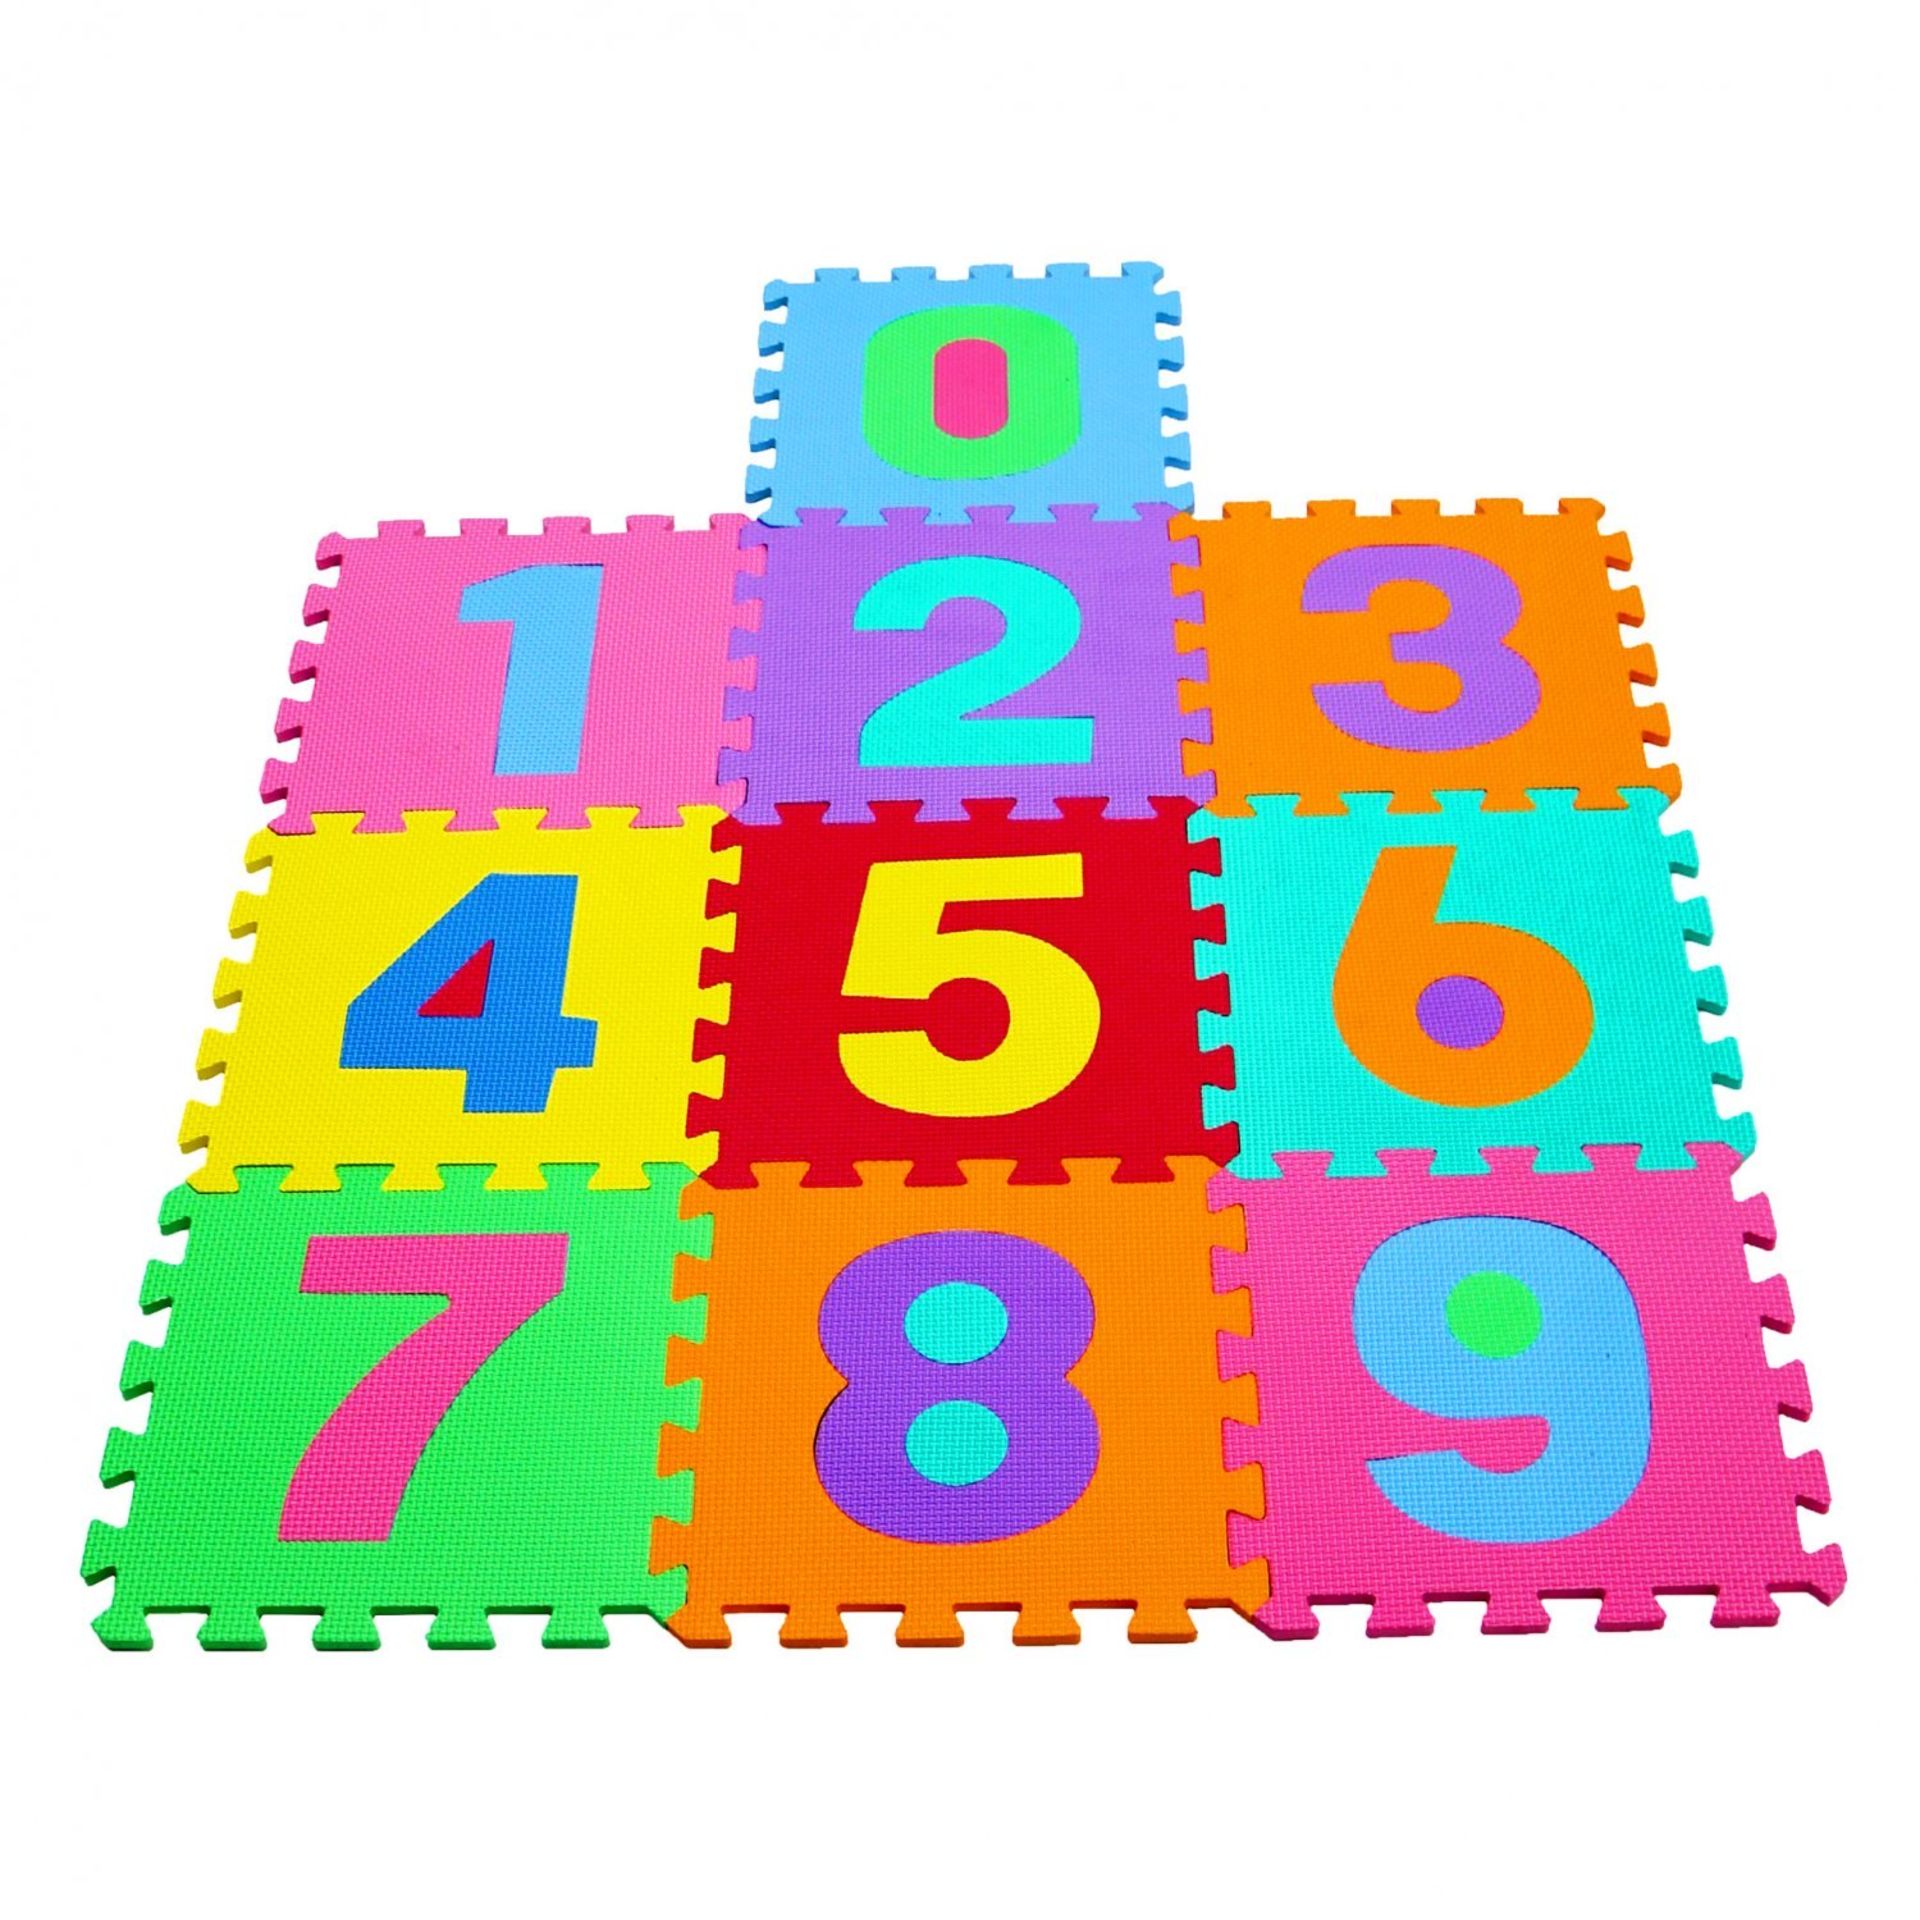 (RU57) 36pc Interlocking EVA Kids Floor Play Mat Alphabet and Numbers The interlocking play ... - Image 2 of 2